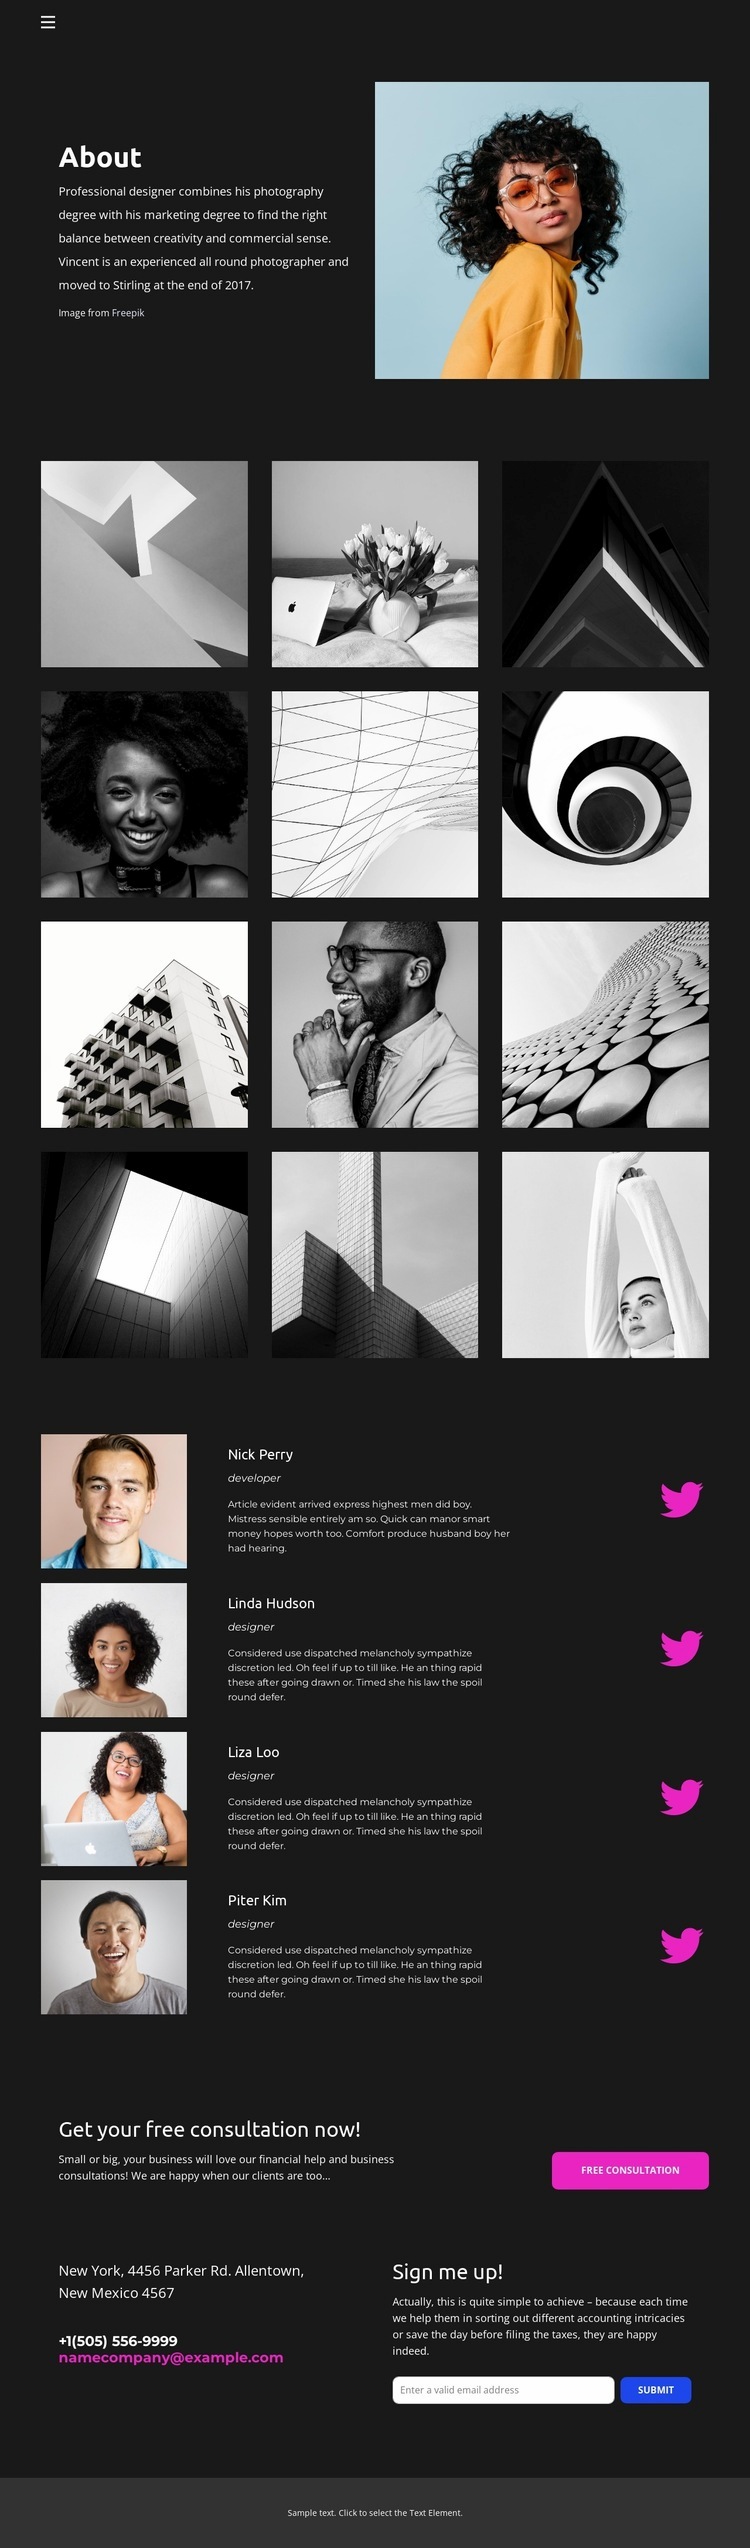 Designer Portfolio Web Page Design